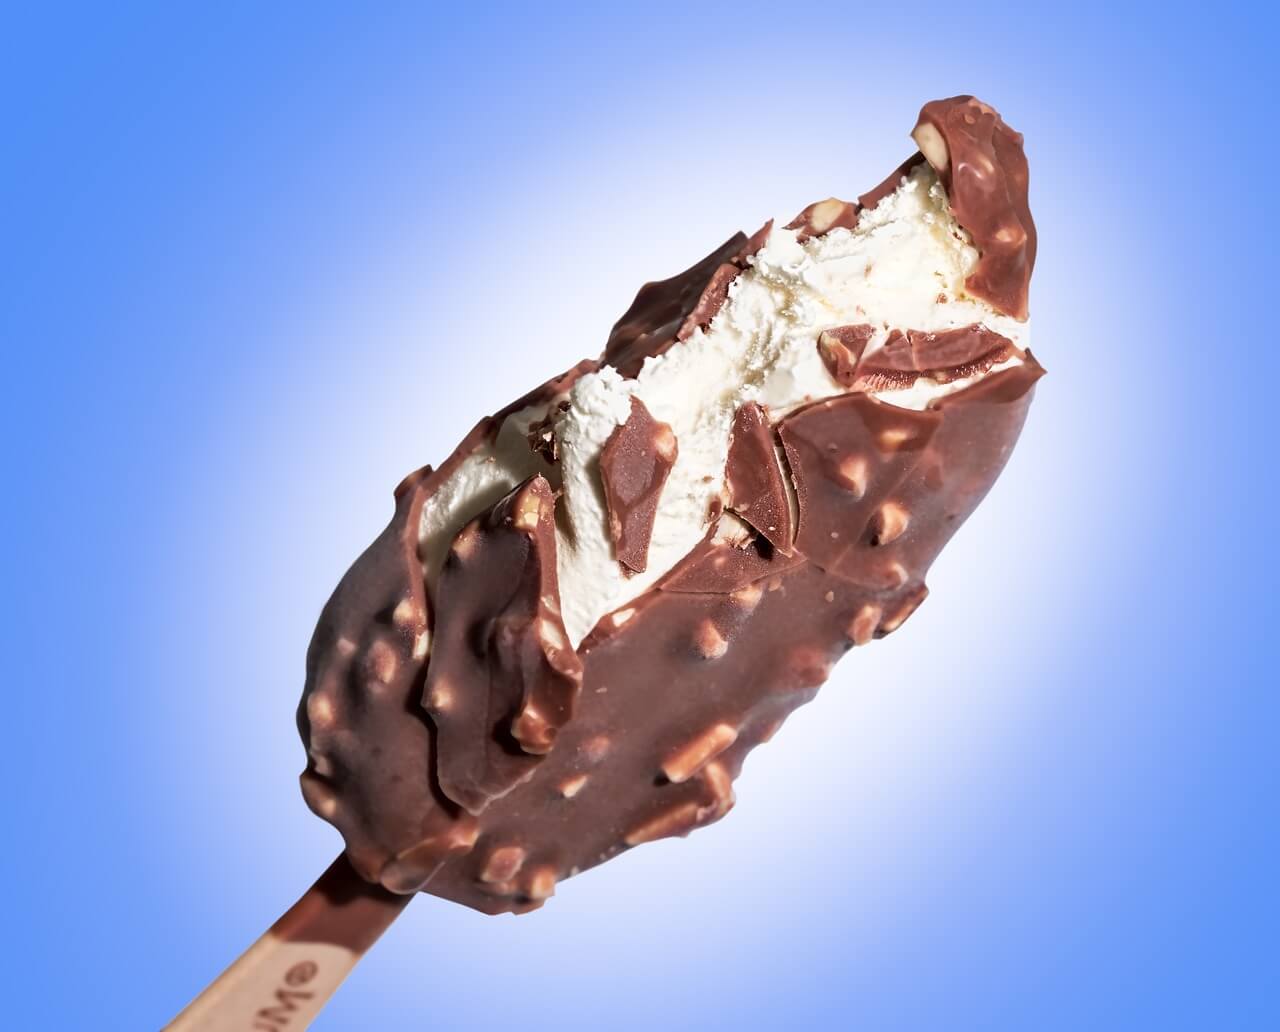 magnum ice cream on a stick